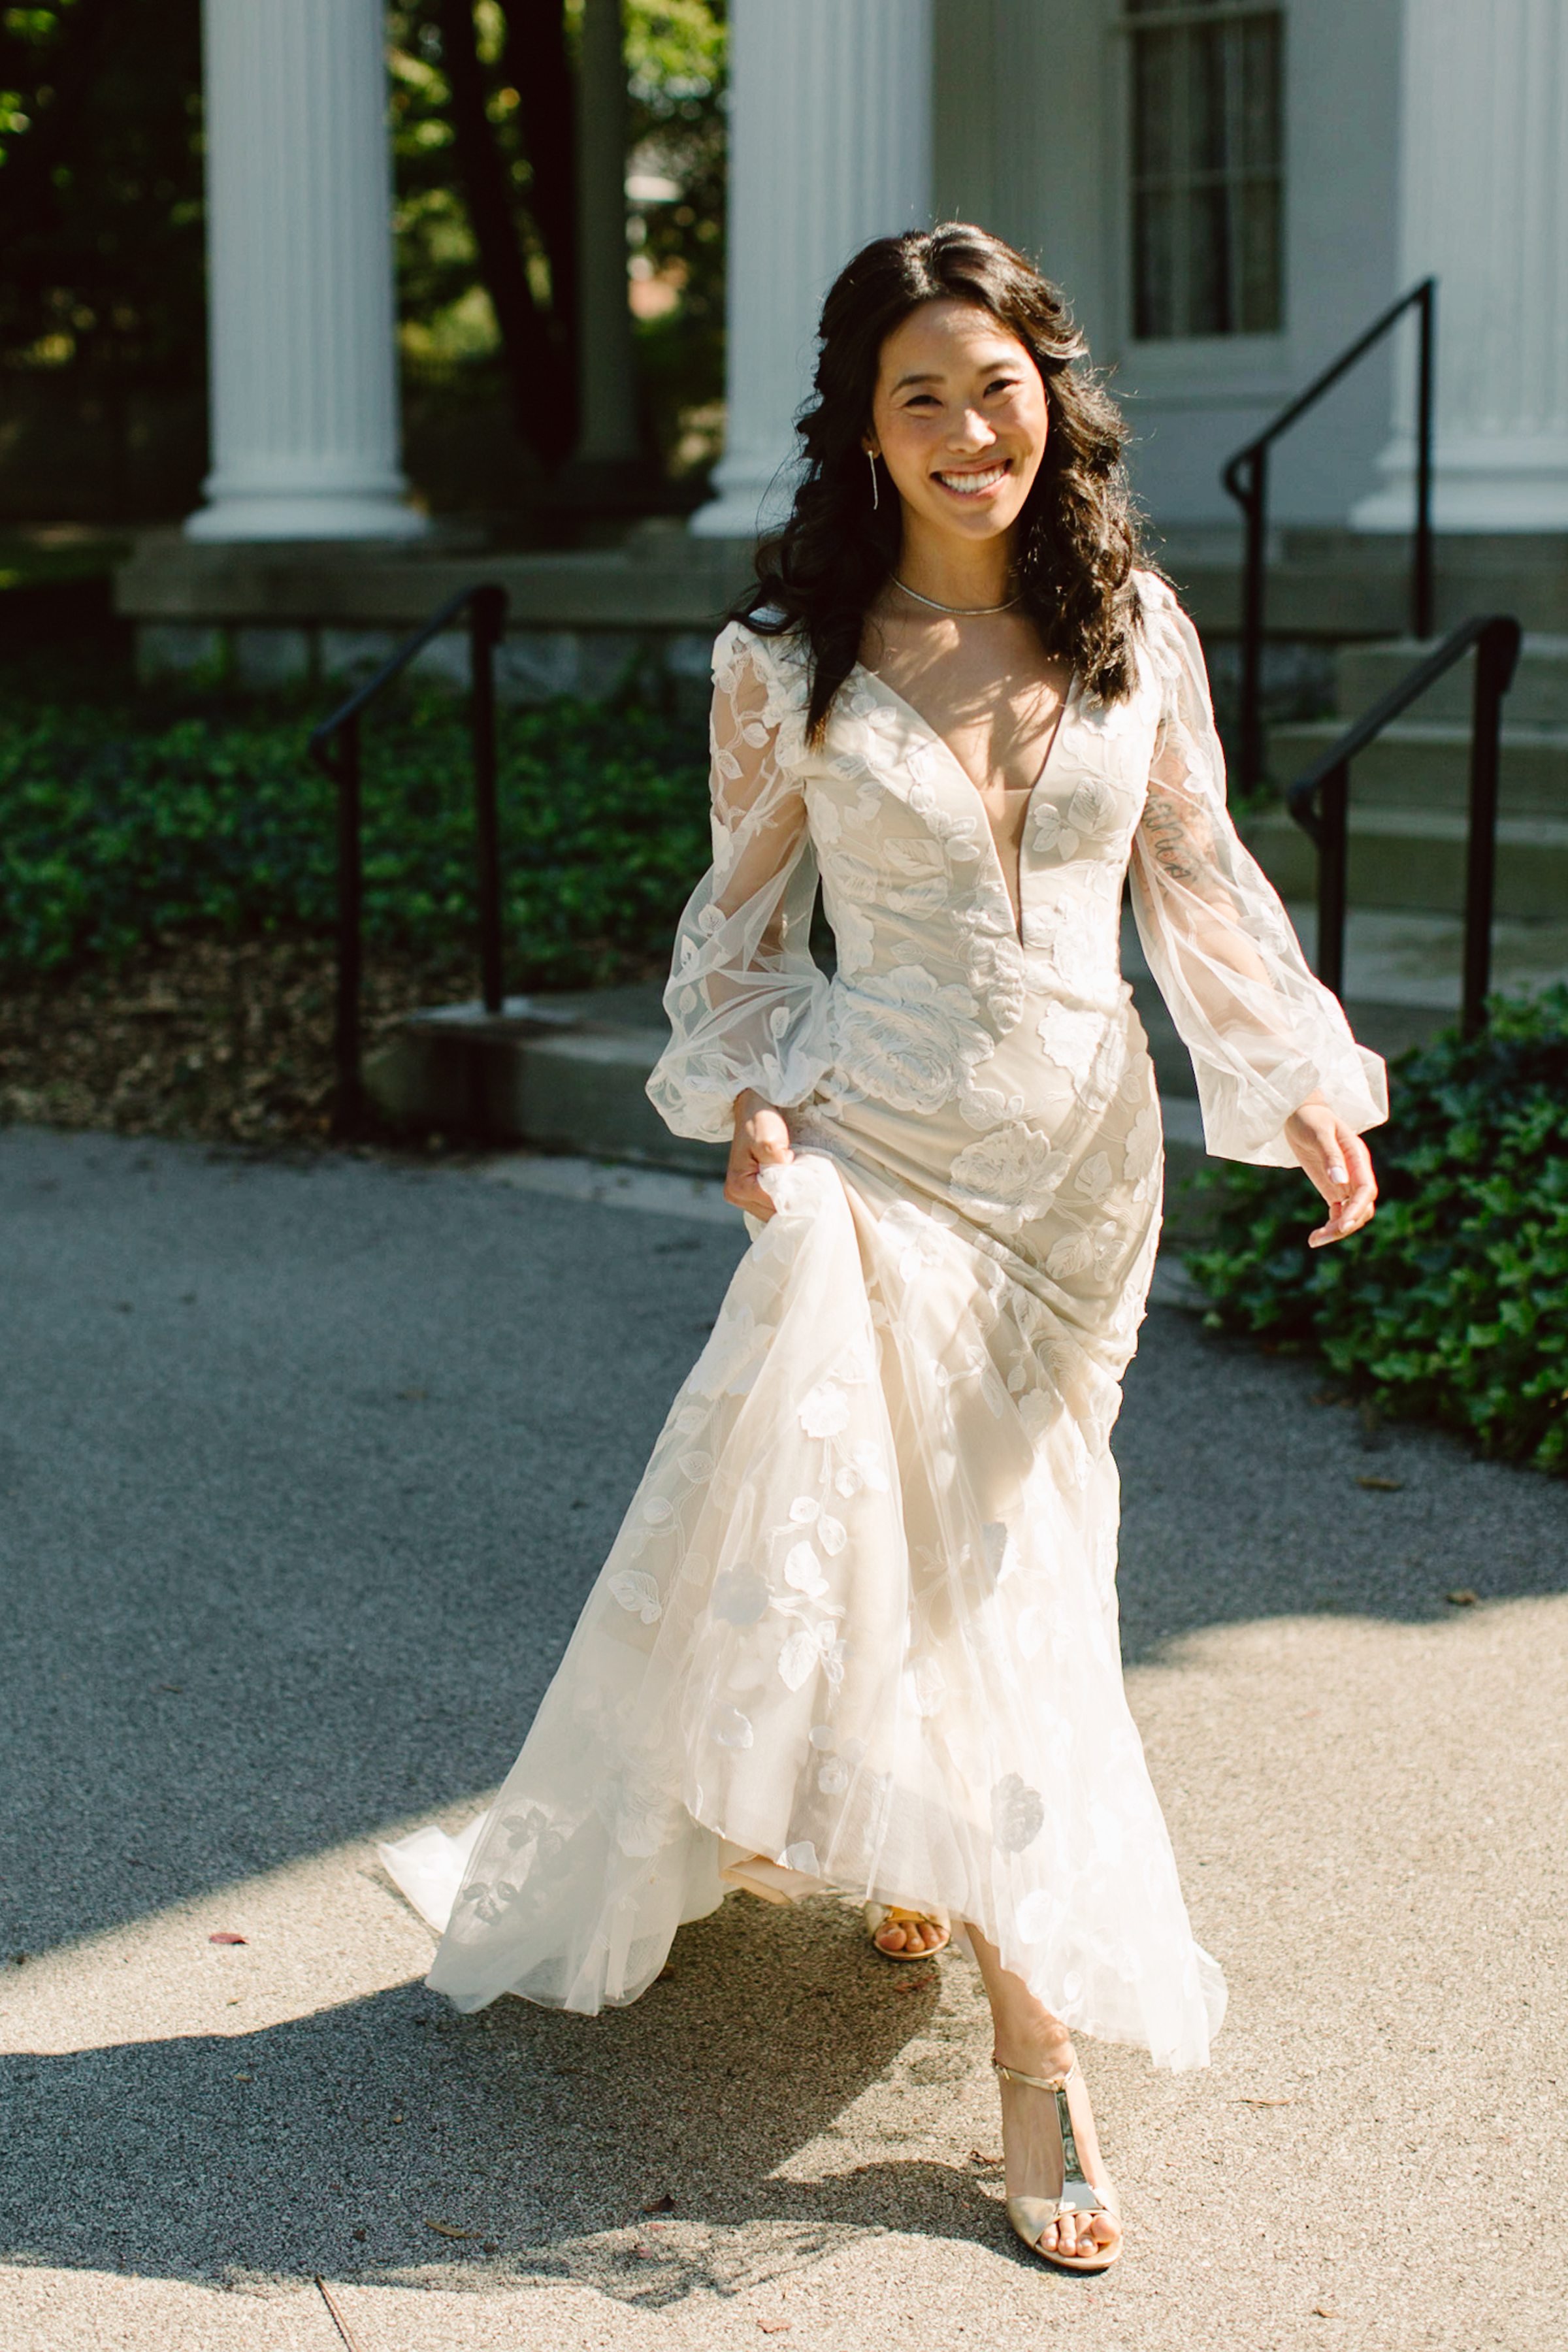 Kendra-Farris-Photography-Whitehall-Mansion-Wedding-Venue-Louisivlle-Kentucky121.jpg